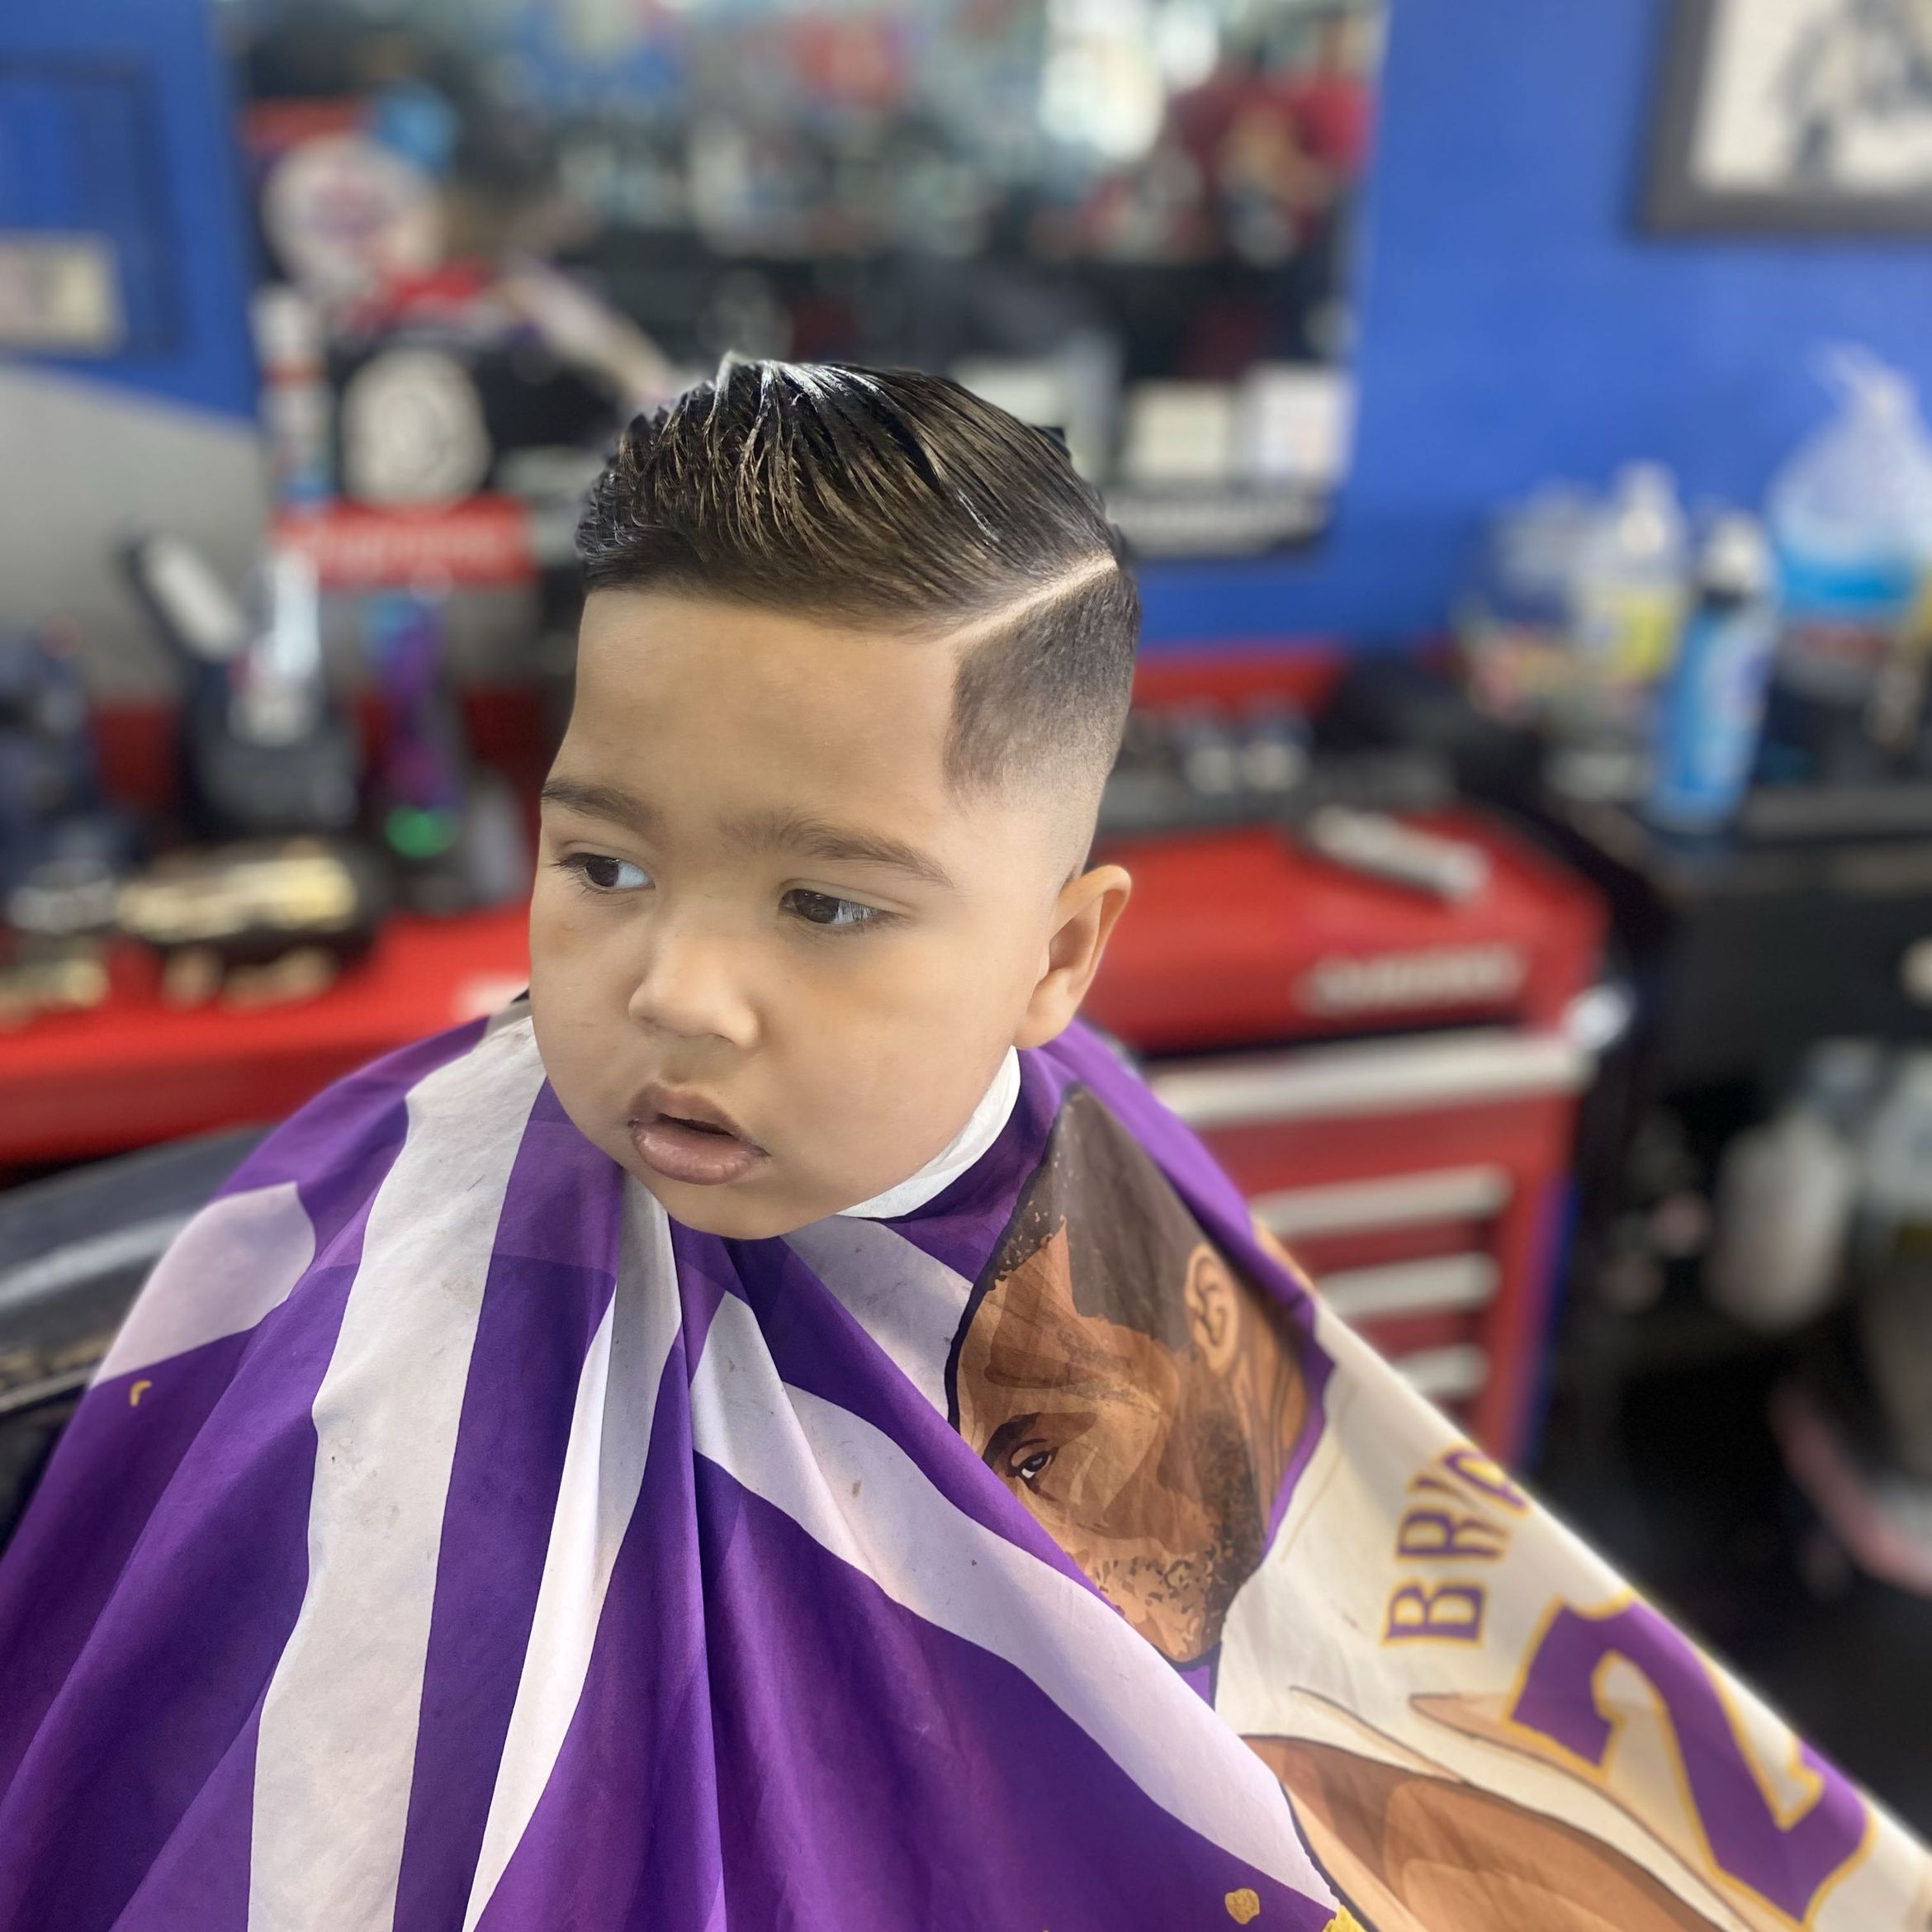 Kids haircut portfolio